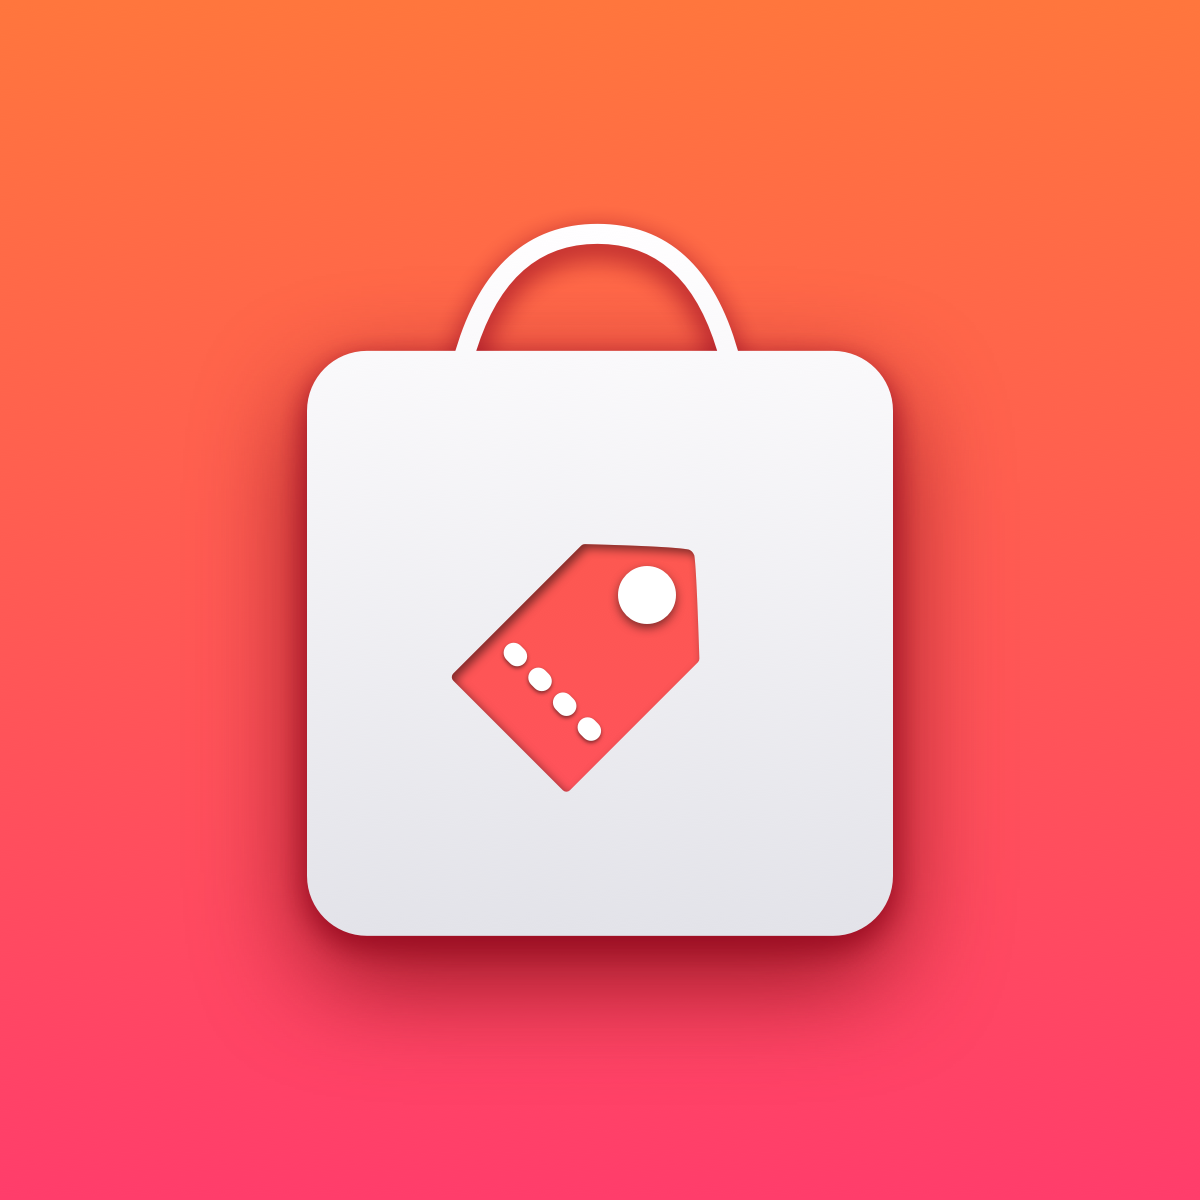 Dcart ‑ Discount in Cart Shopify App